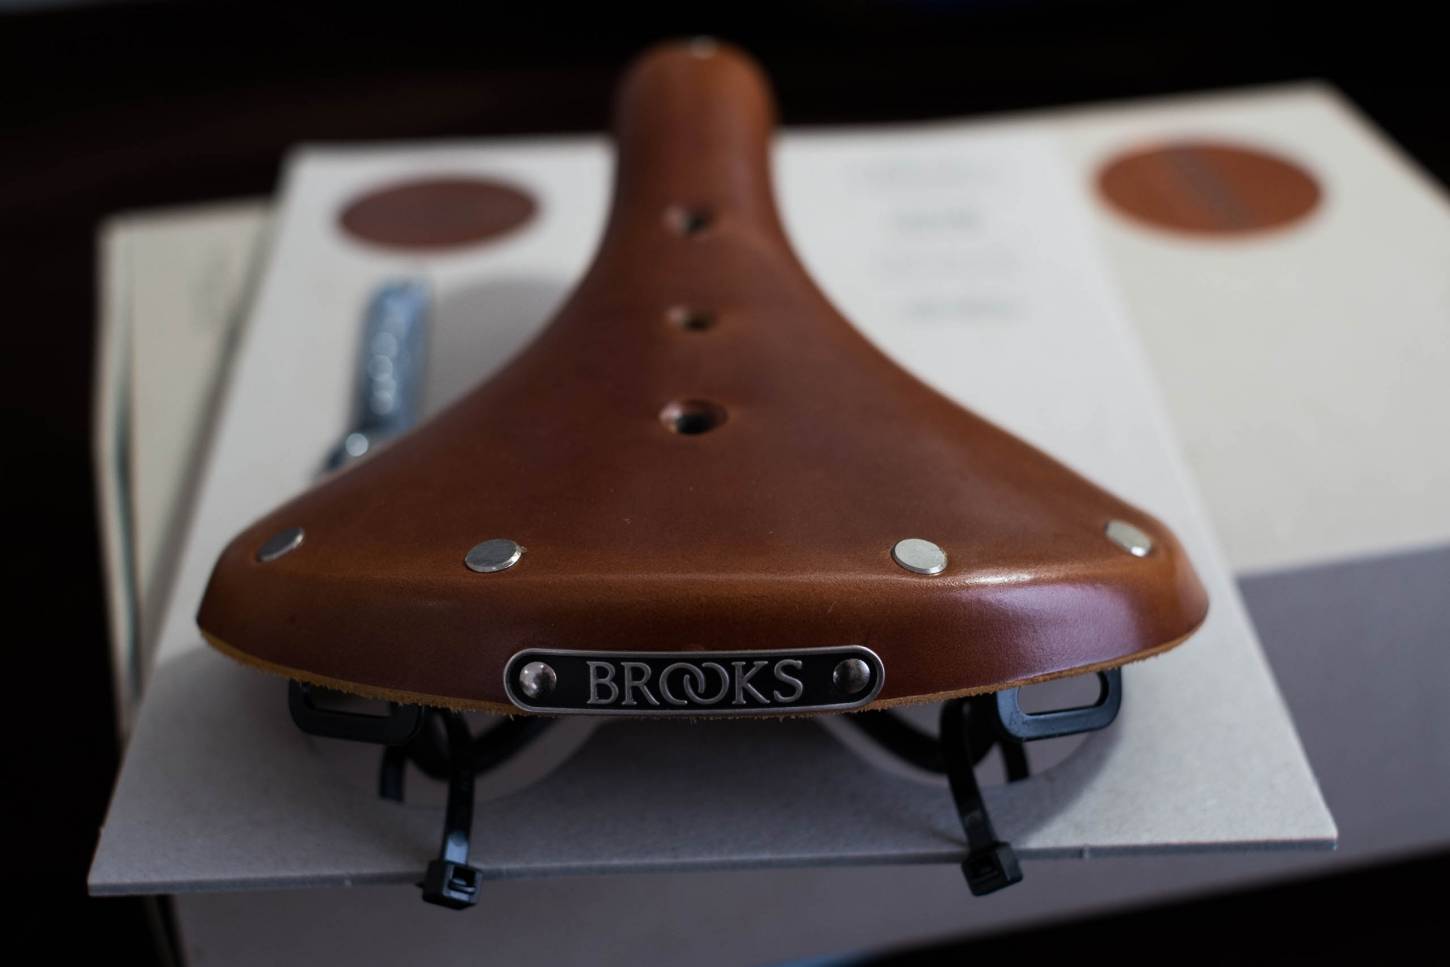 Brooks B17 S Standard Saddle Core Leather Ladies Classic Saddle in black + brown + honey